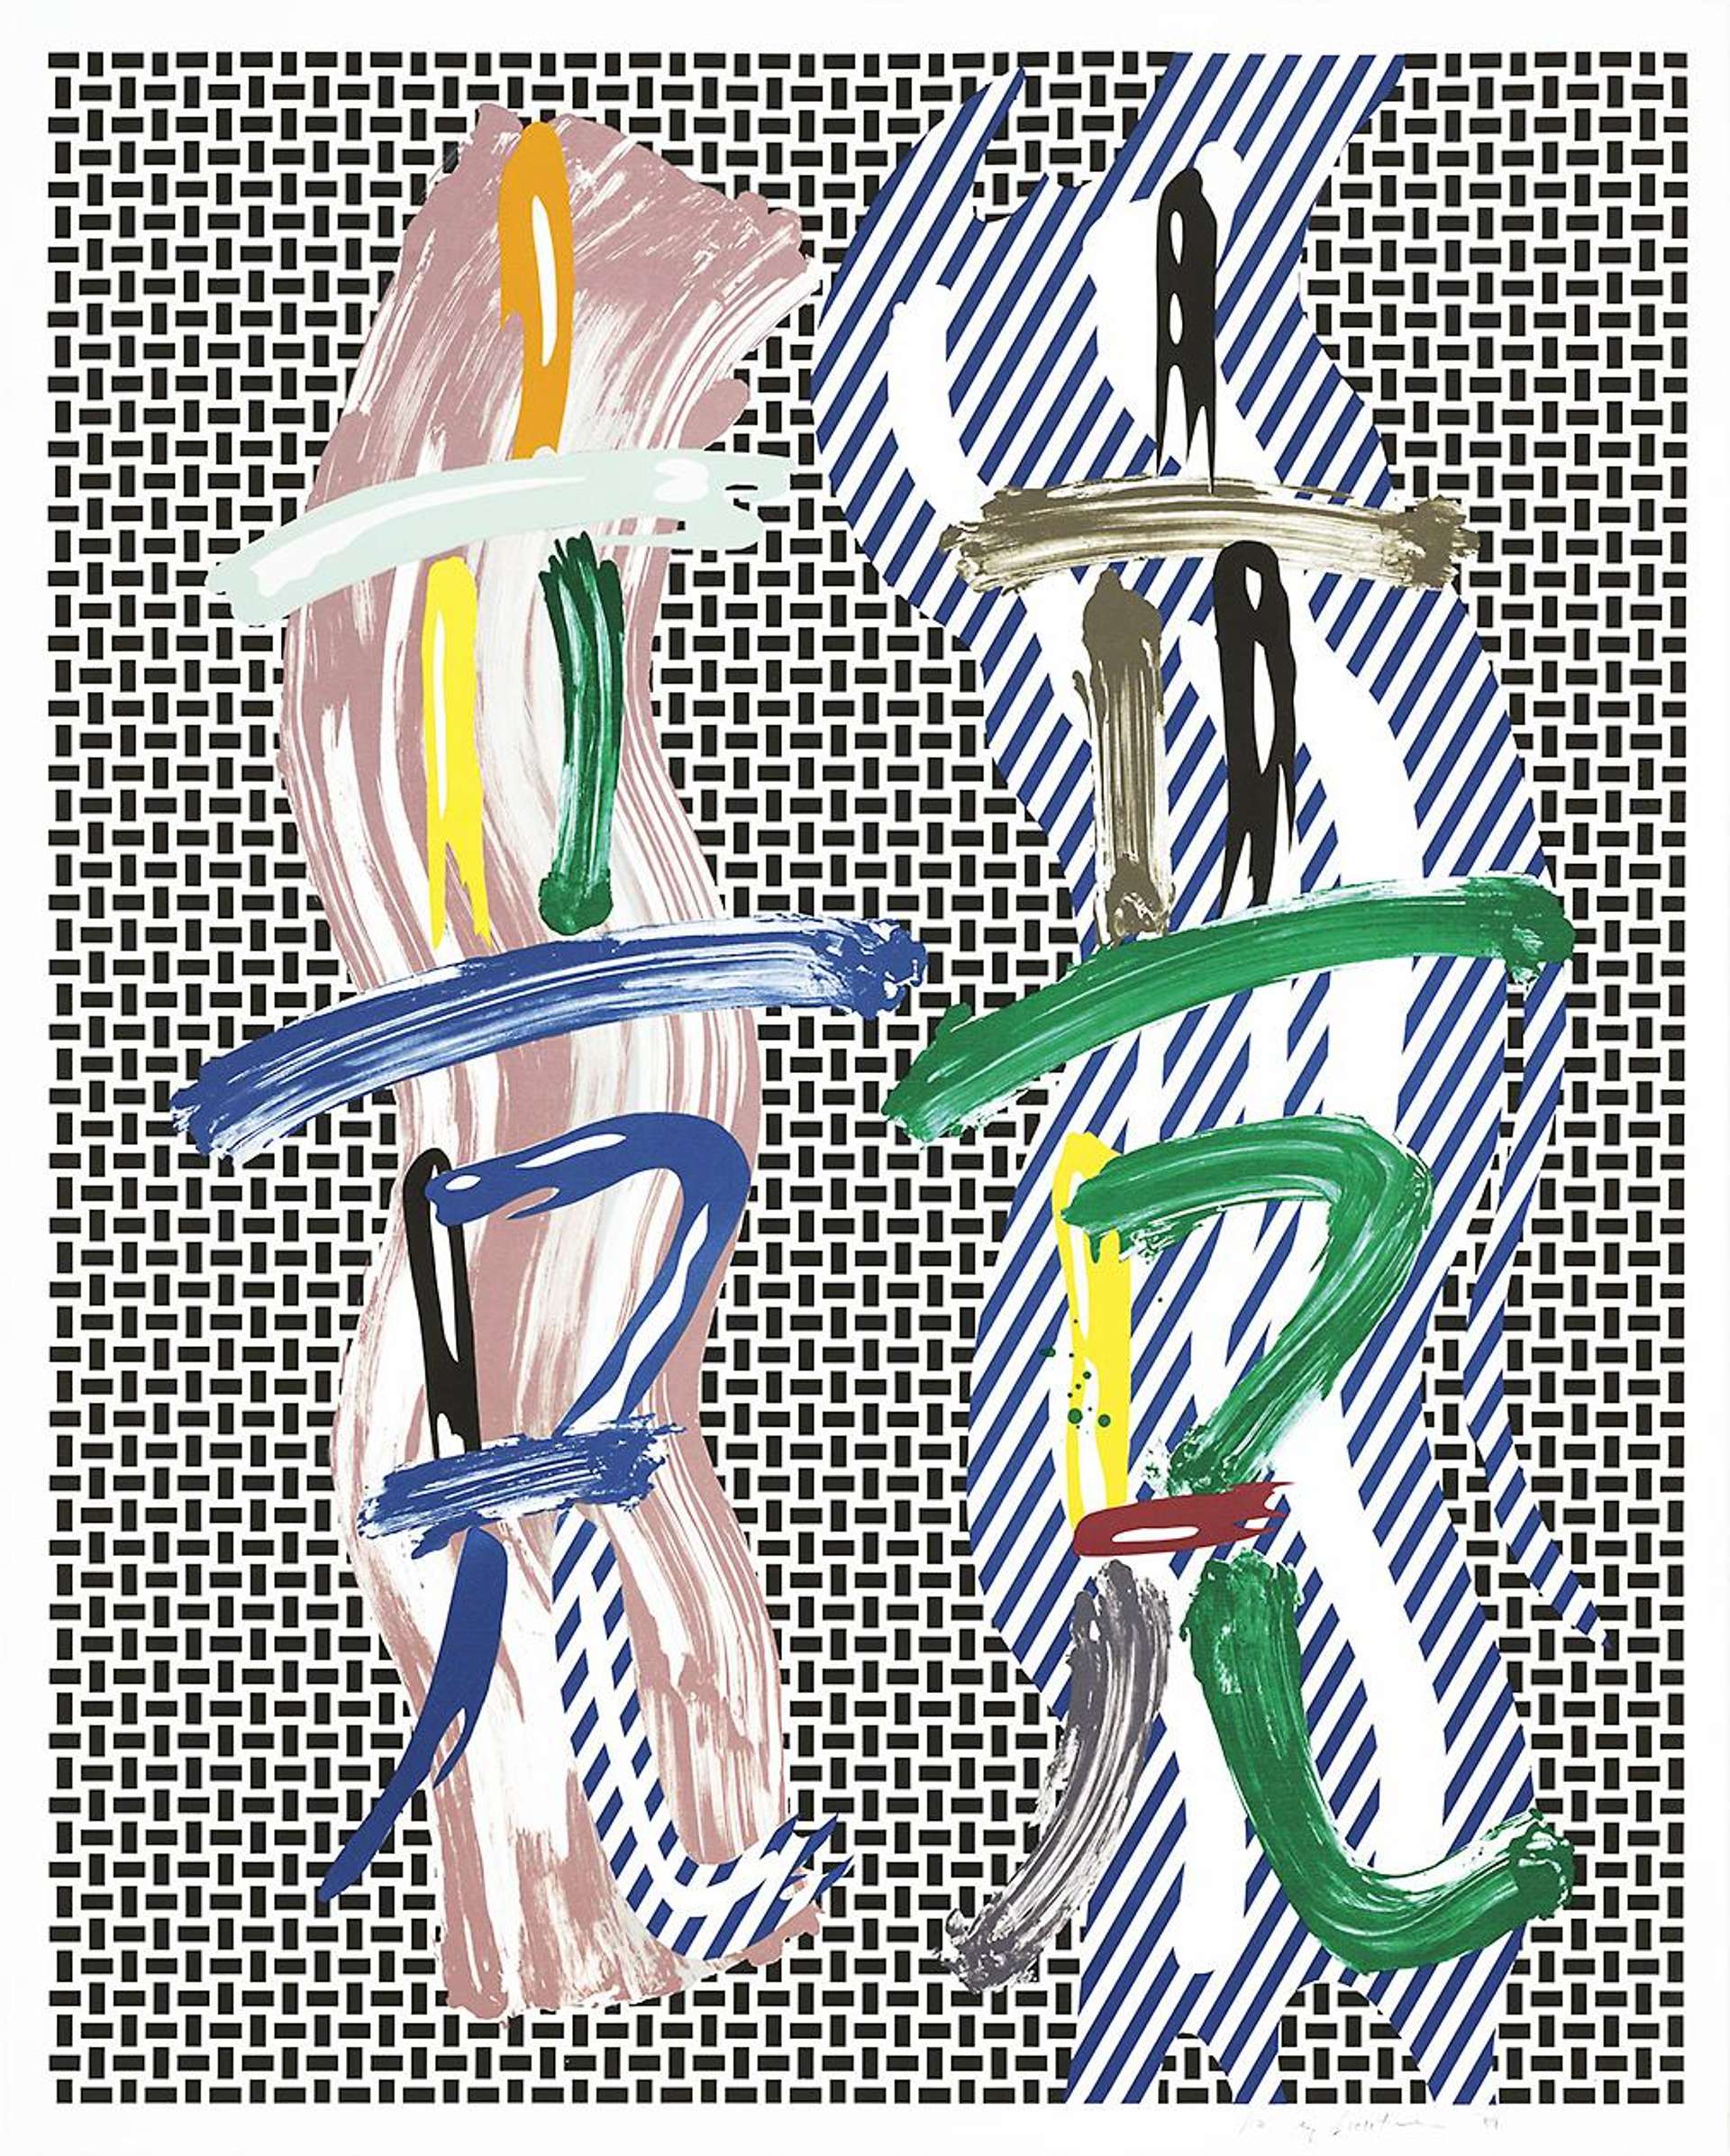 Brushstroke Contest - Signed Print by Roy Lichtenstein 1989 - MyArtBroker